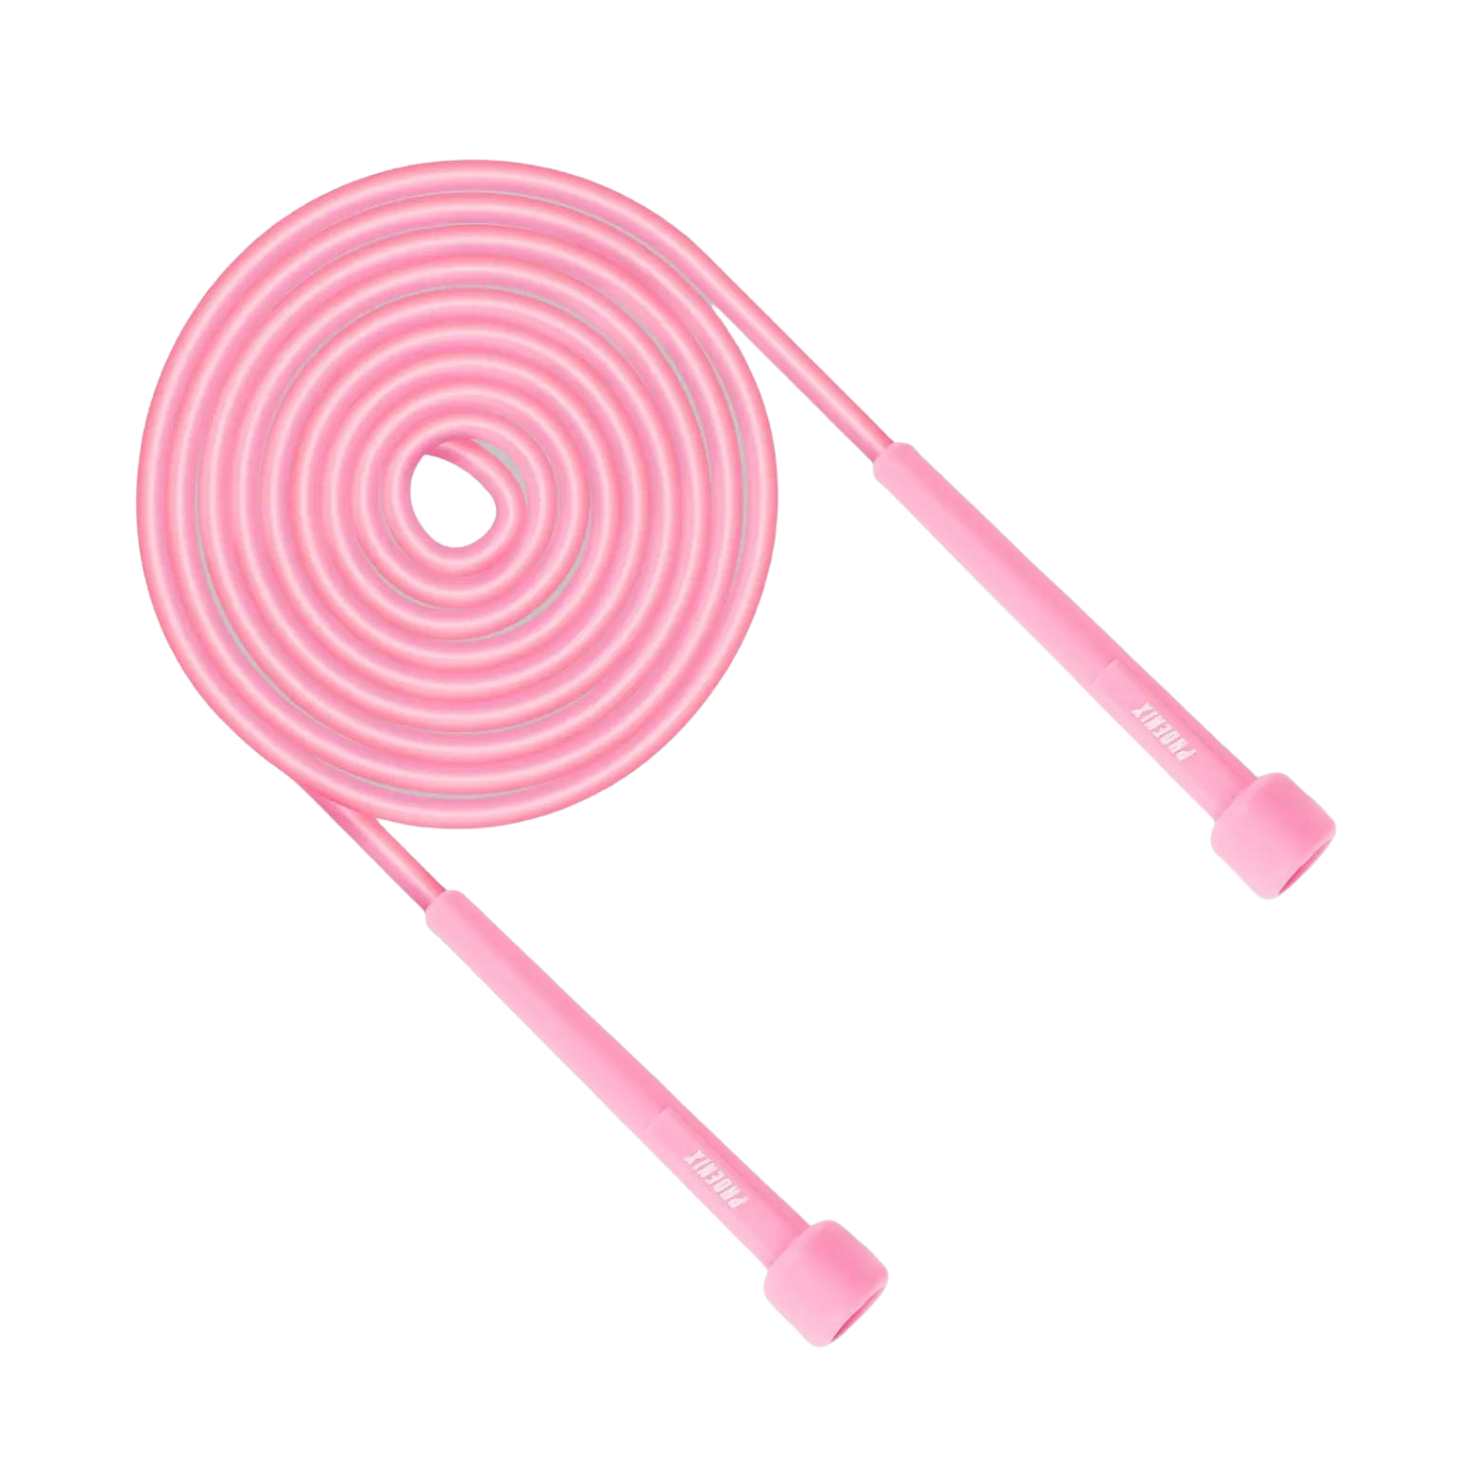 Speed Skipping Rope - Pink